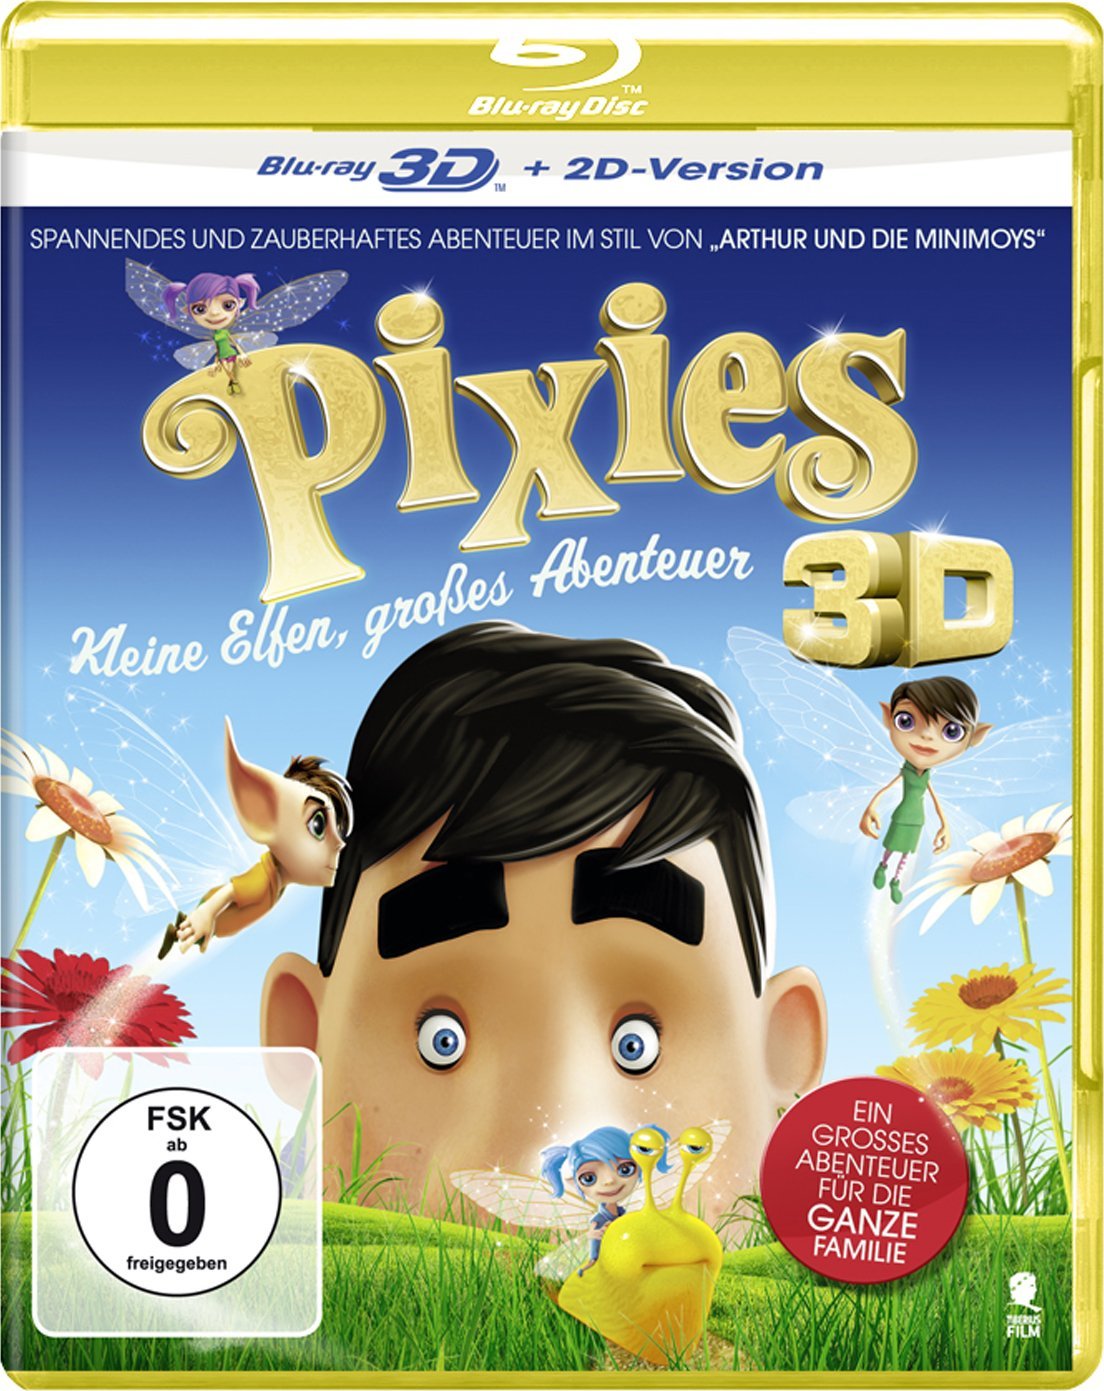 Styrke Centrum emne Pixies 3D Blu-ray (Blu-ray 3D + Blu-ray) (Germany)